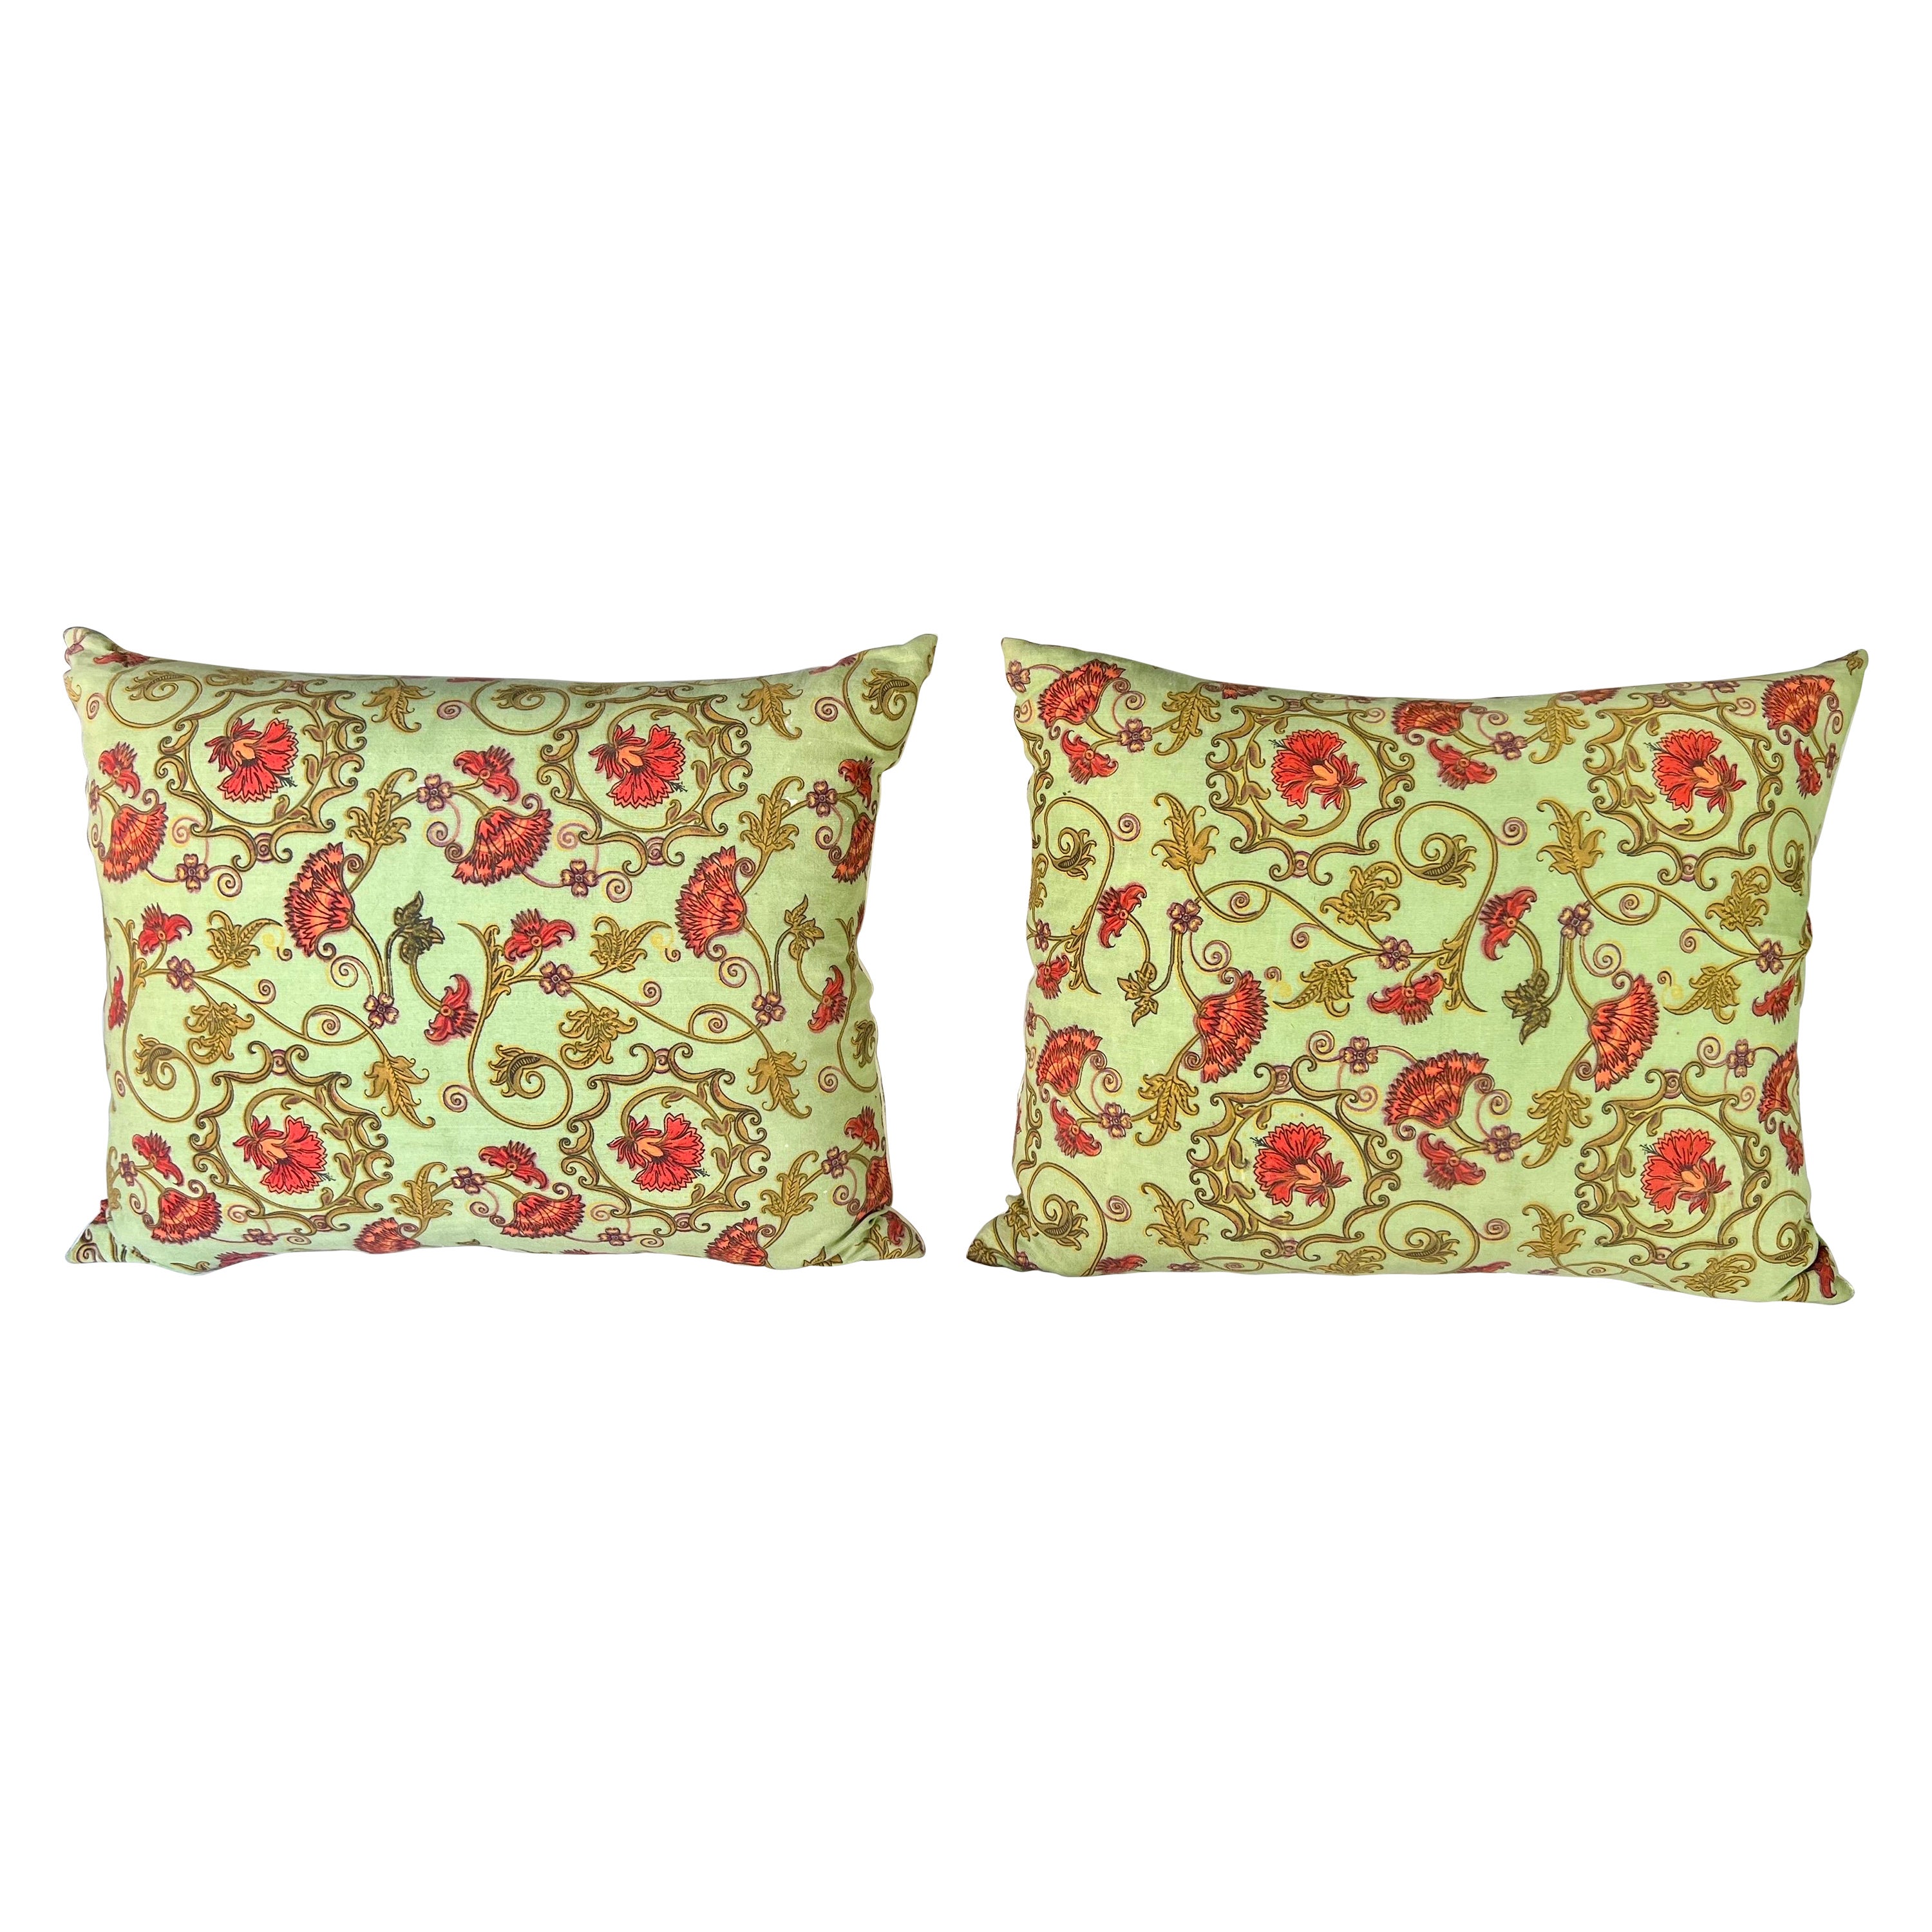 Pair of Custom Cotton Floral Pillows